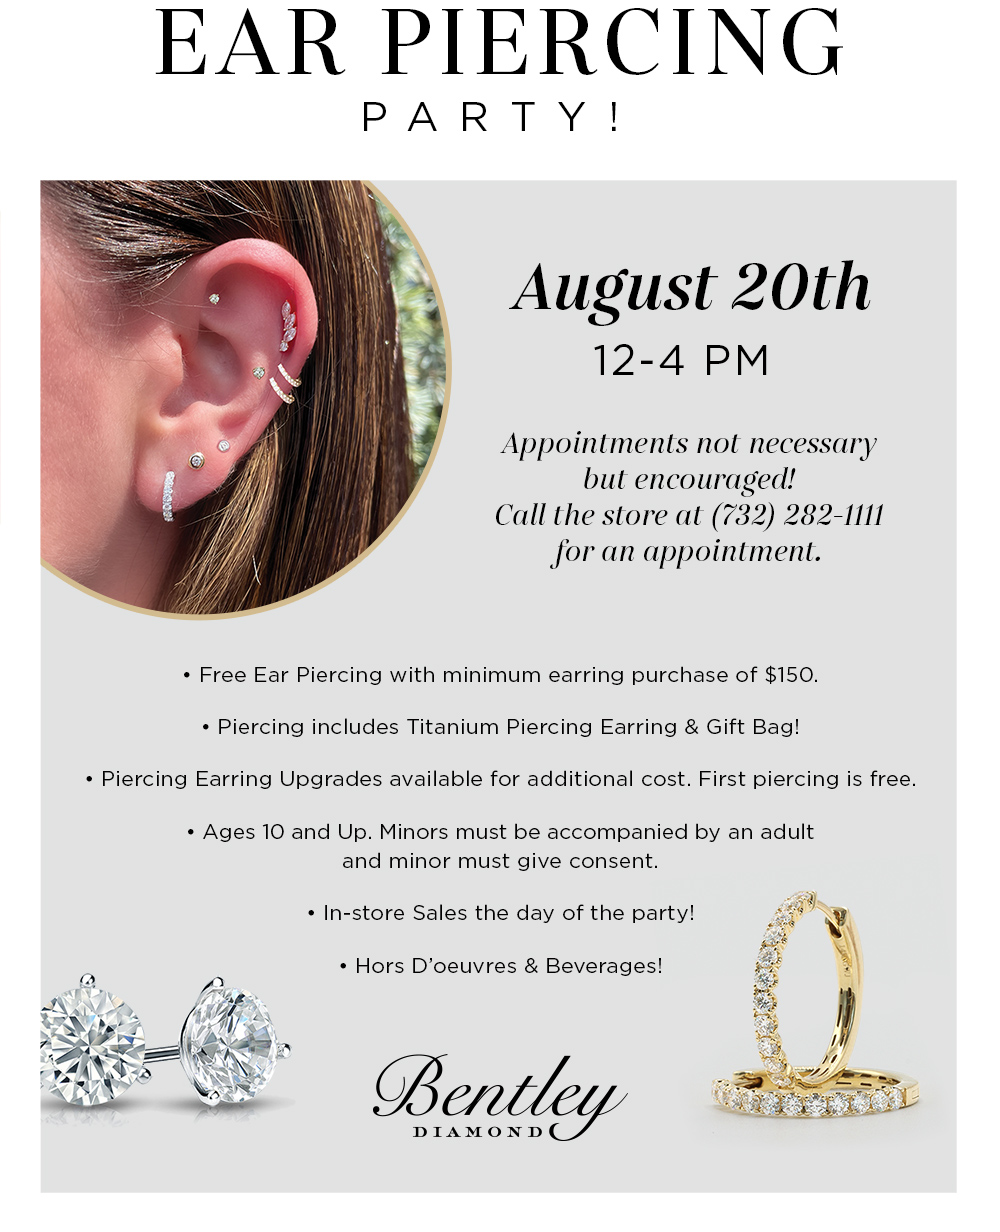 Bentley Diamond - Ear Piercing Party!